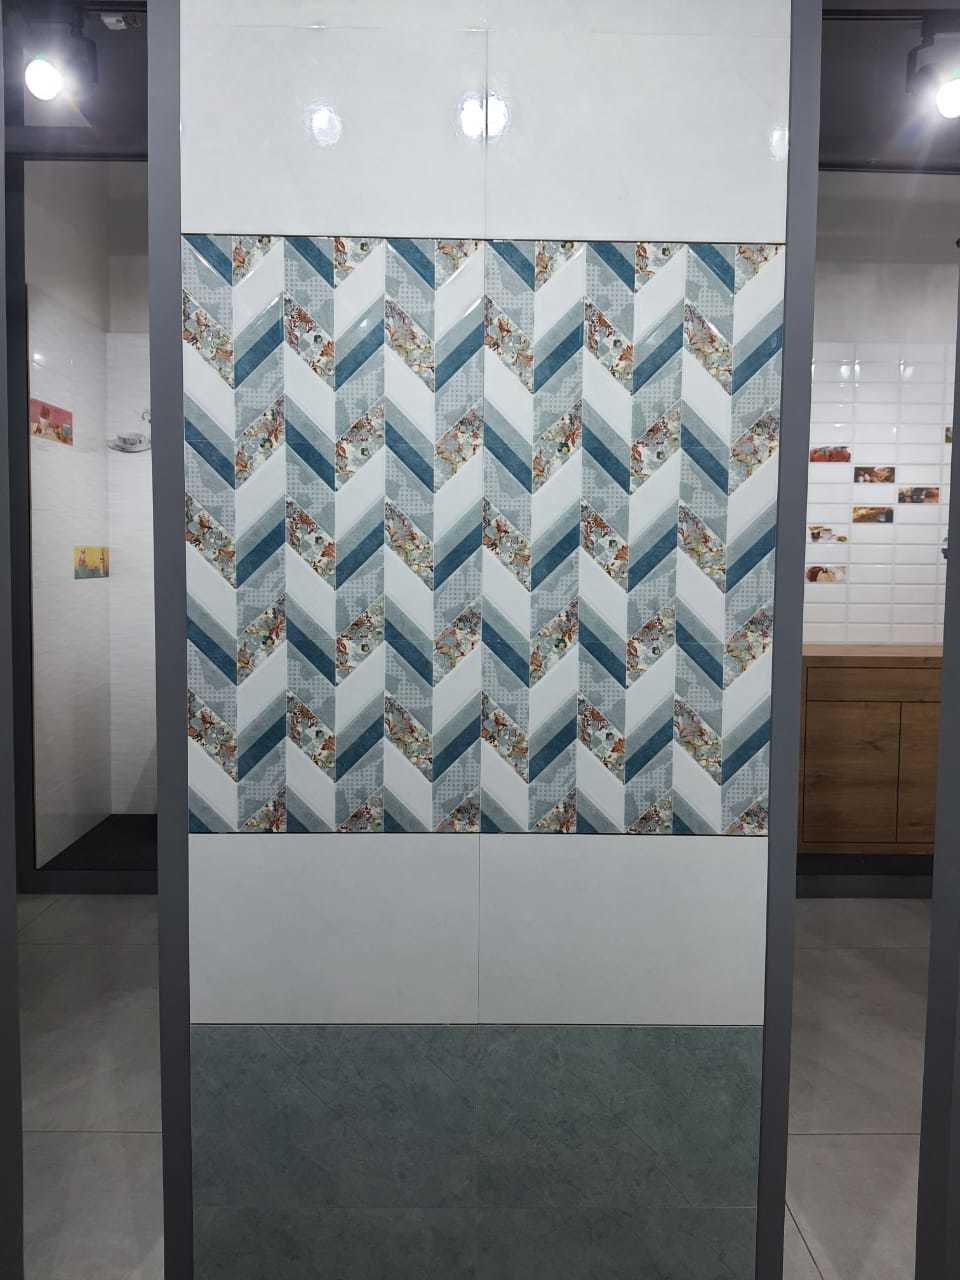 30x45 cm Ceramic Wall Tiles Exporter